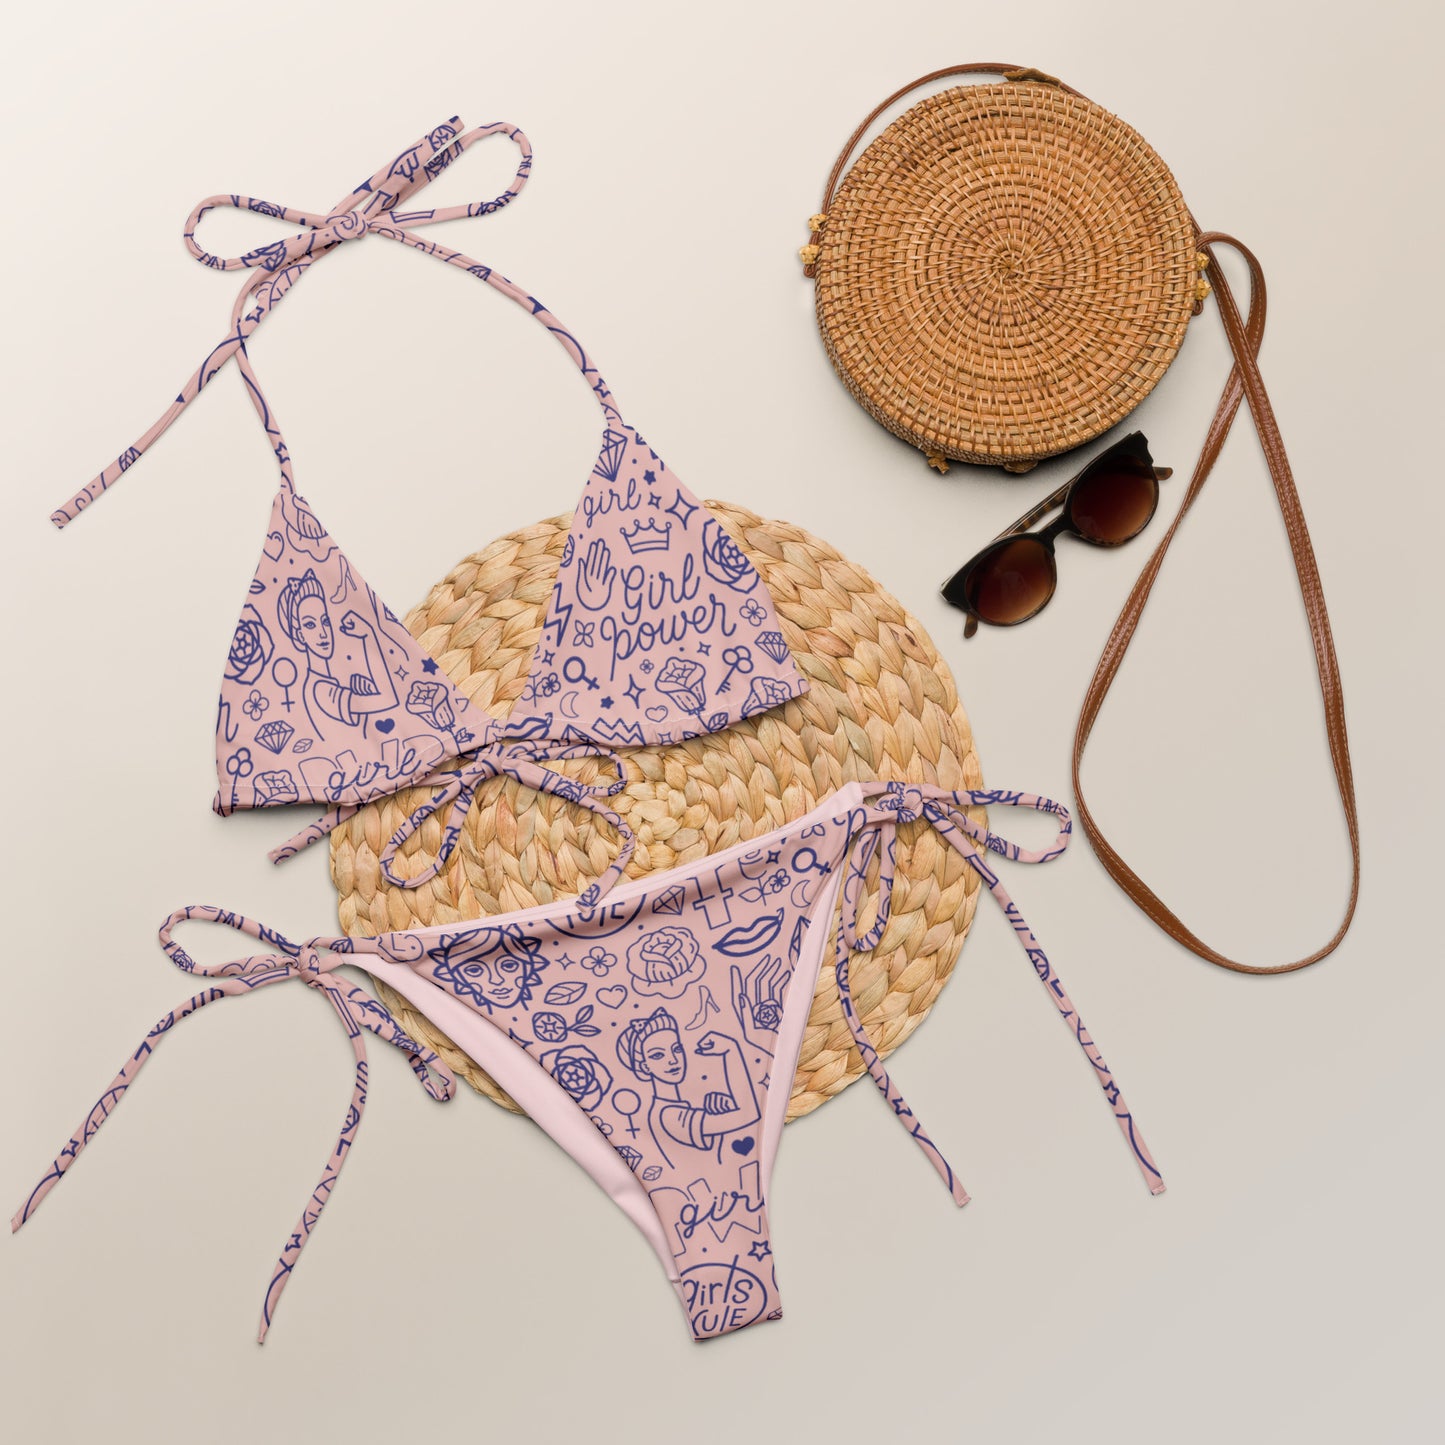 String Bikini (Glamourange Women Swimwear By Patterns - 0015 Model)